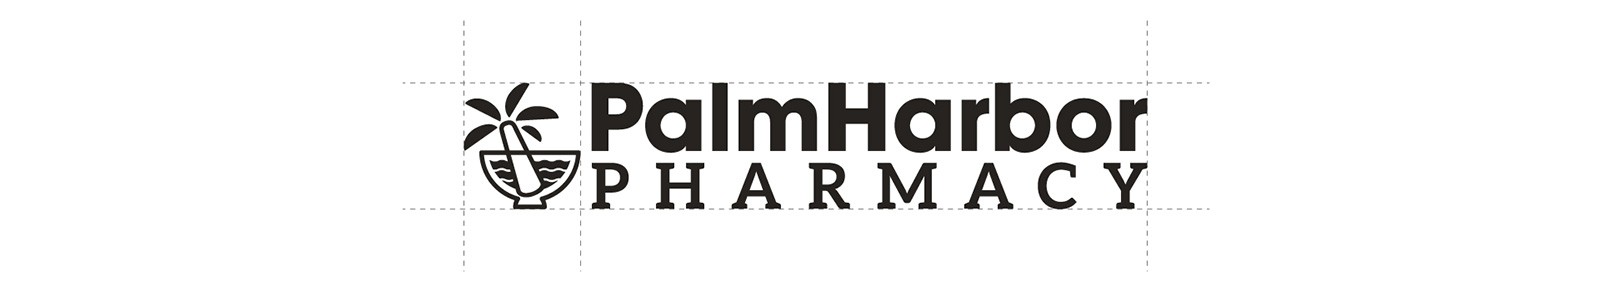 Independent Pharmacy branding logo design